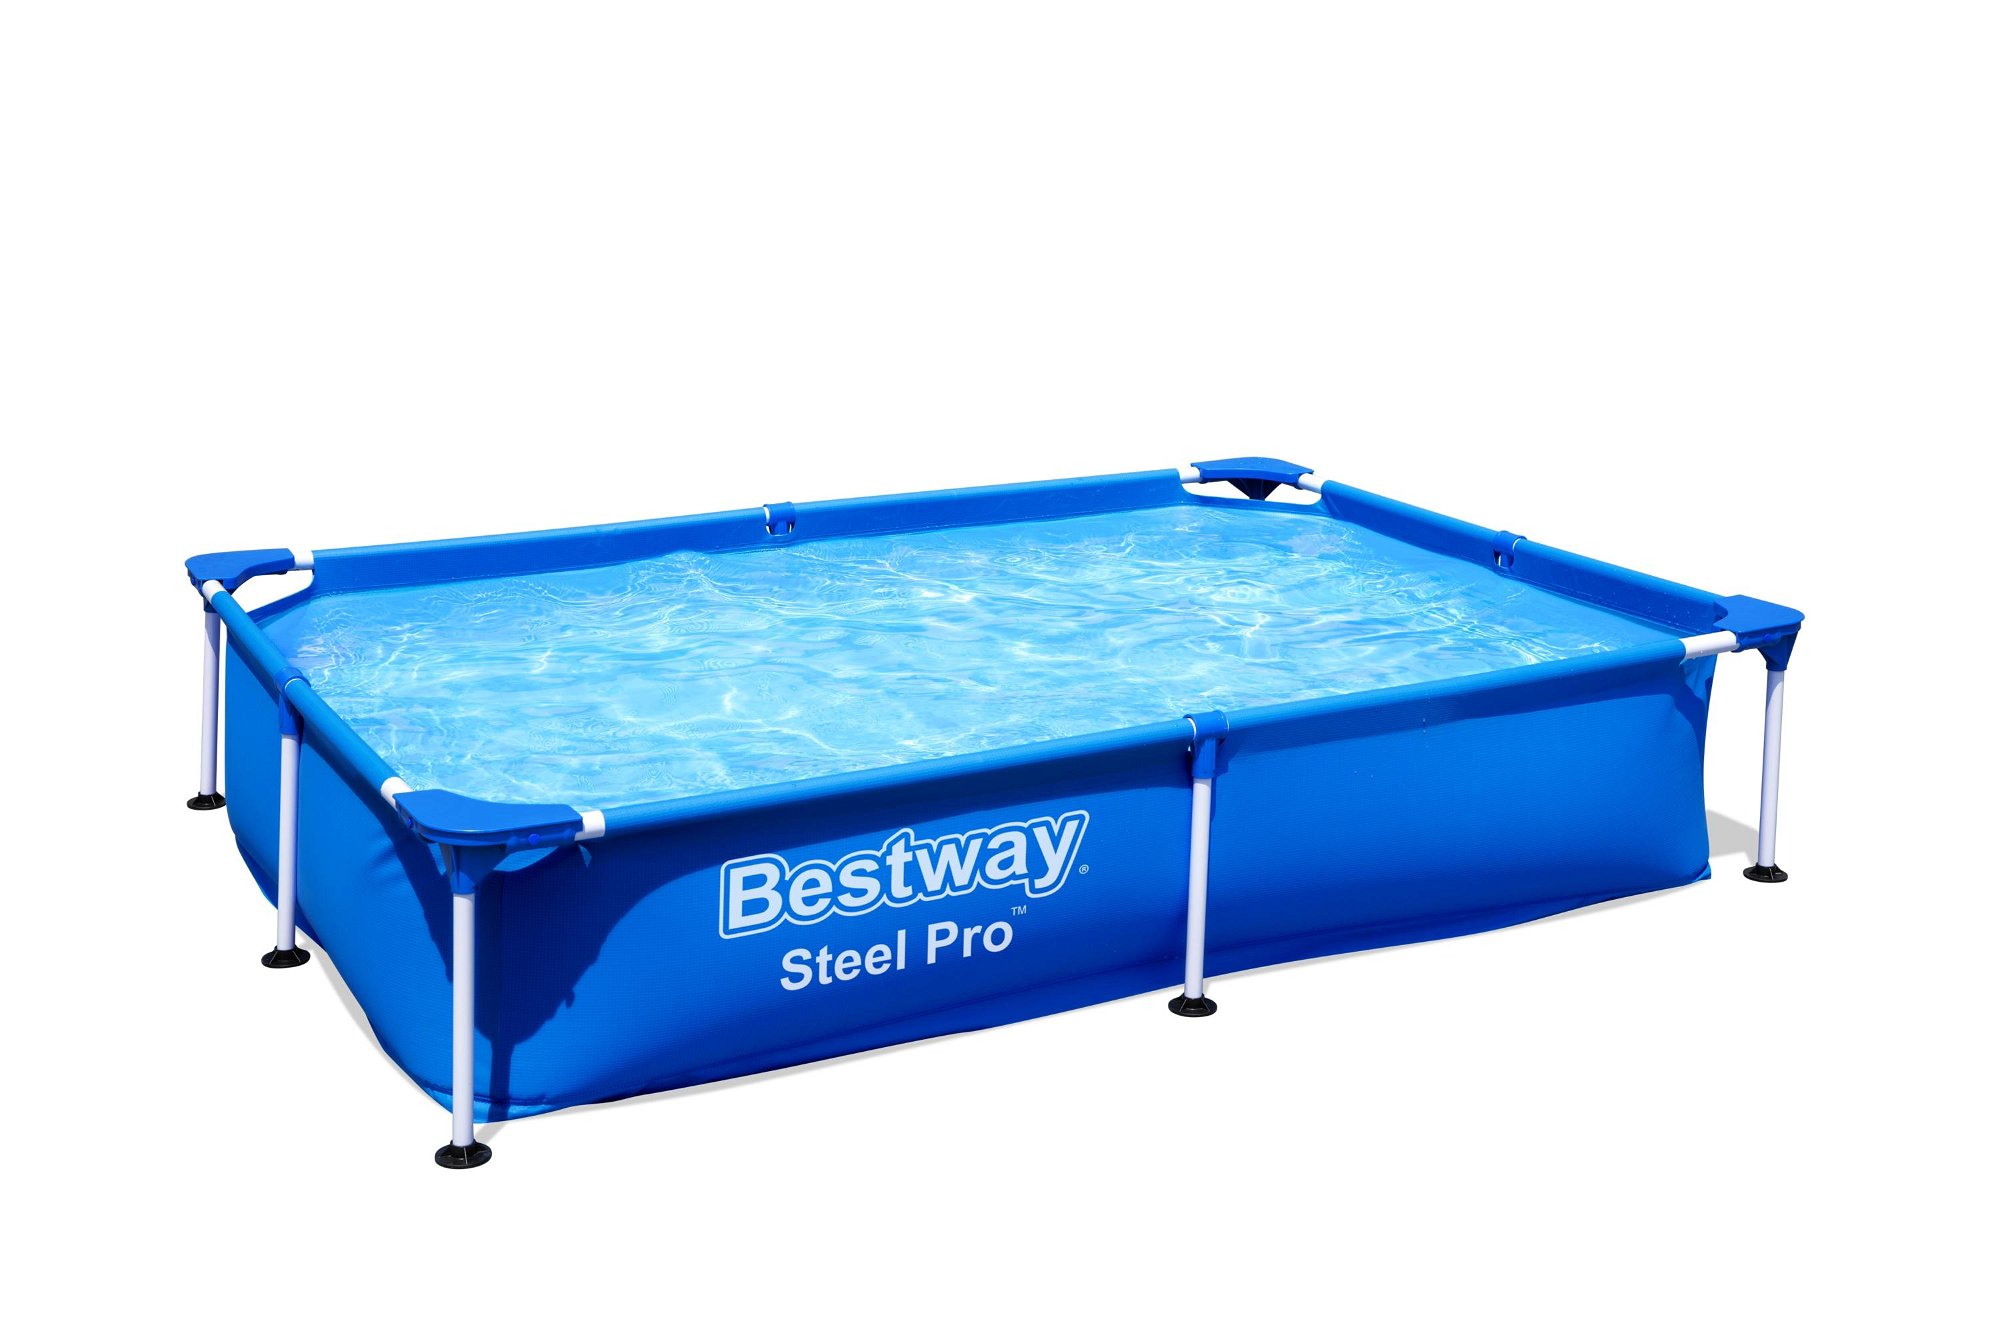 Bestway Pool Steel Pro, eckig, blau, ohne Zubehör, 221 x 150 x 43 cm SW:10010.4